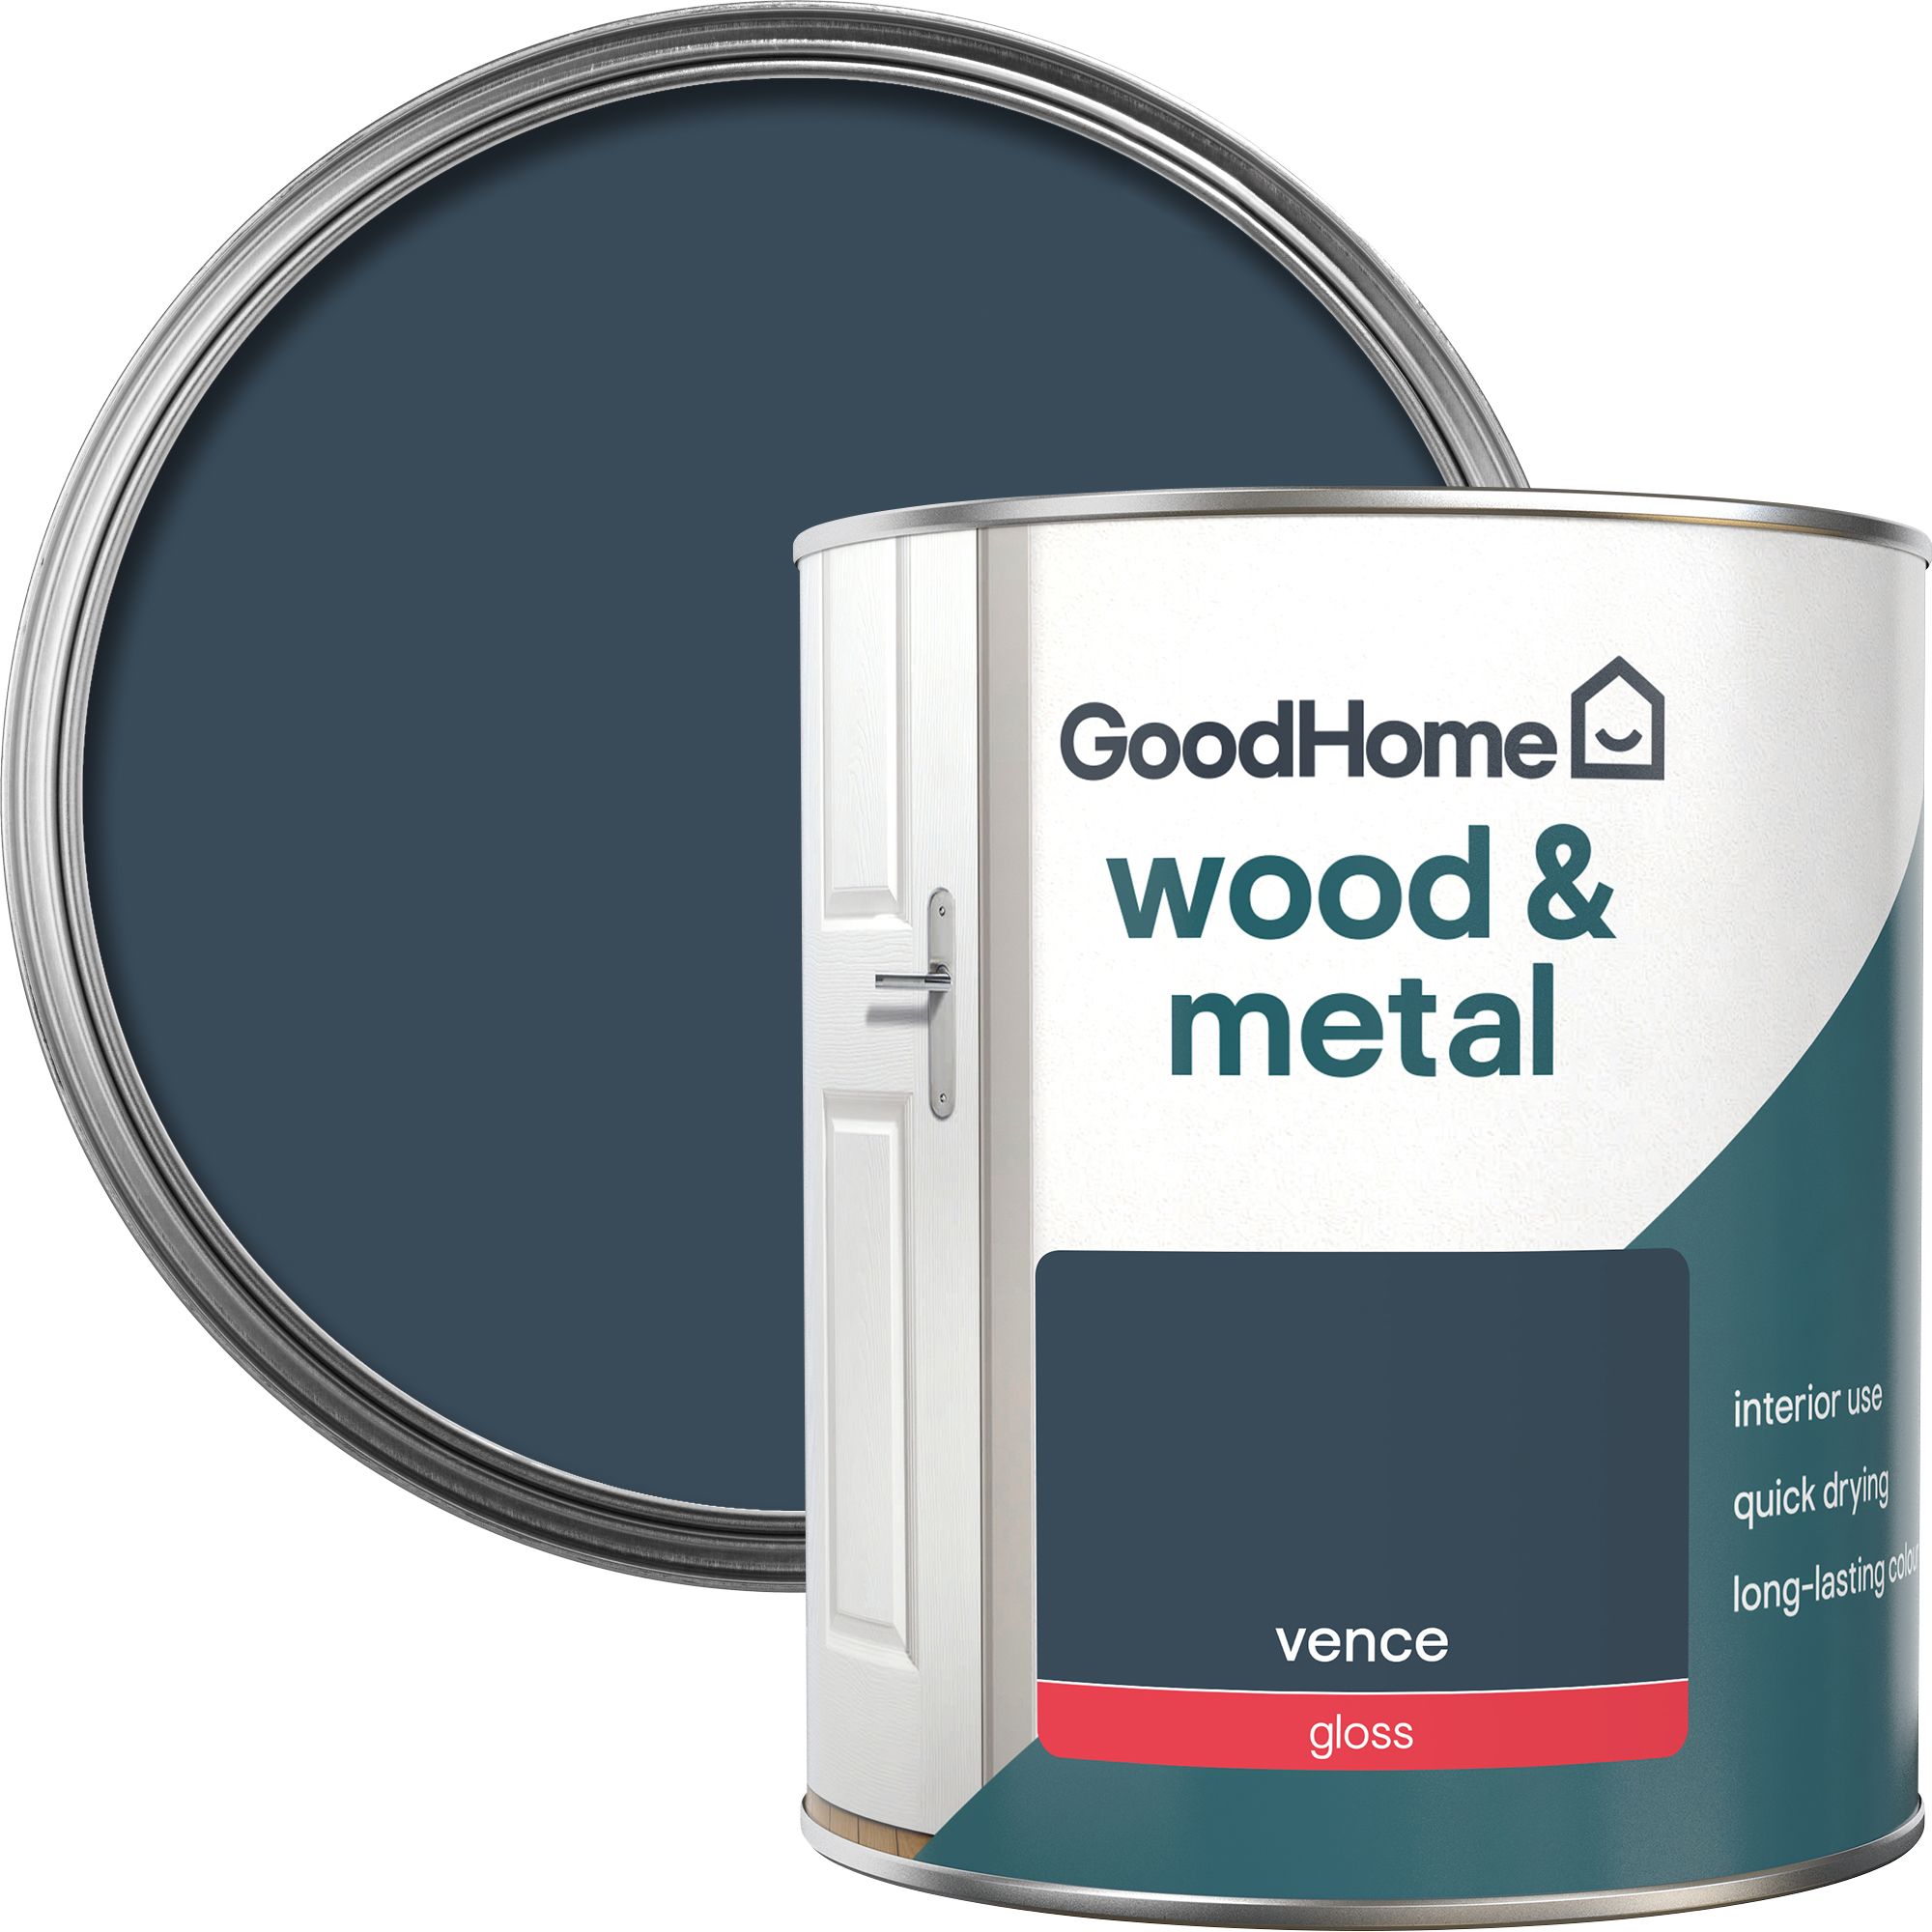 GoodHome Vence Gloss Metal & wood paint, 750ml